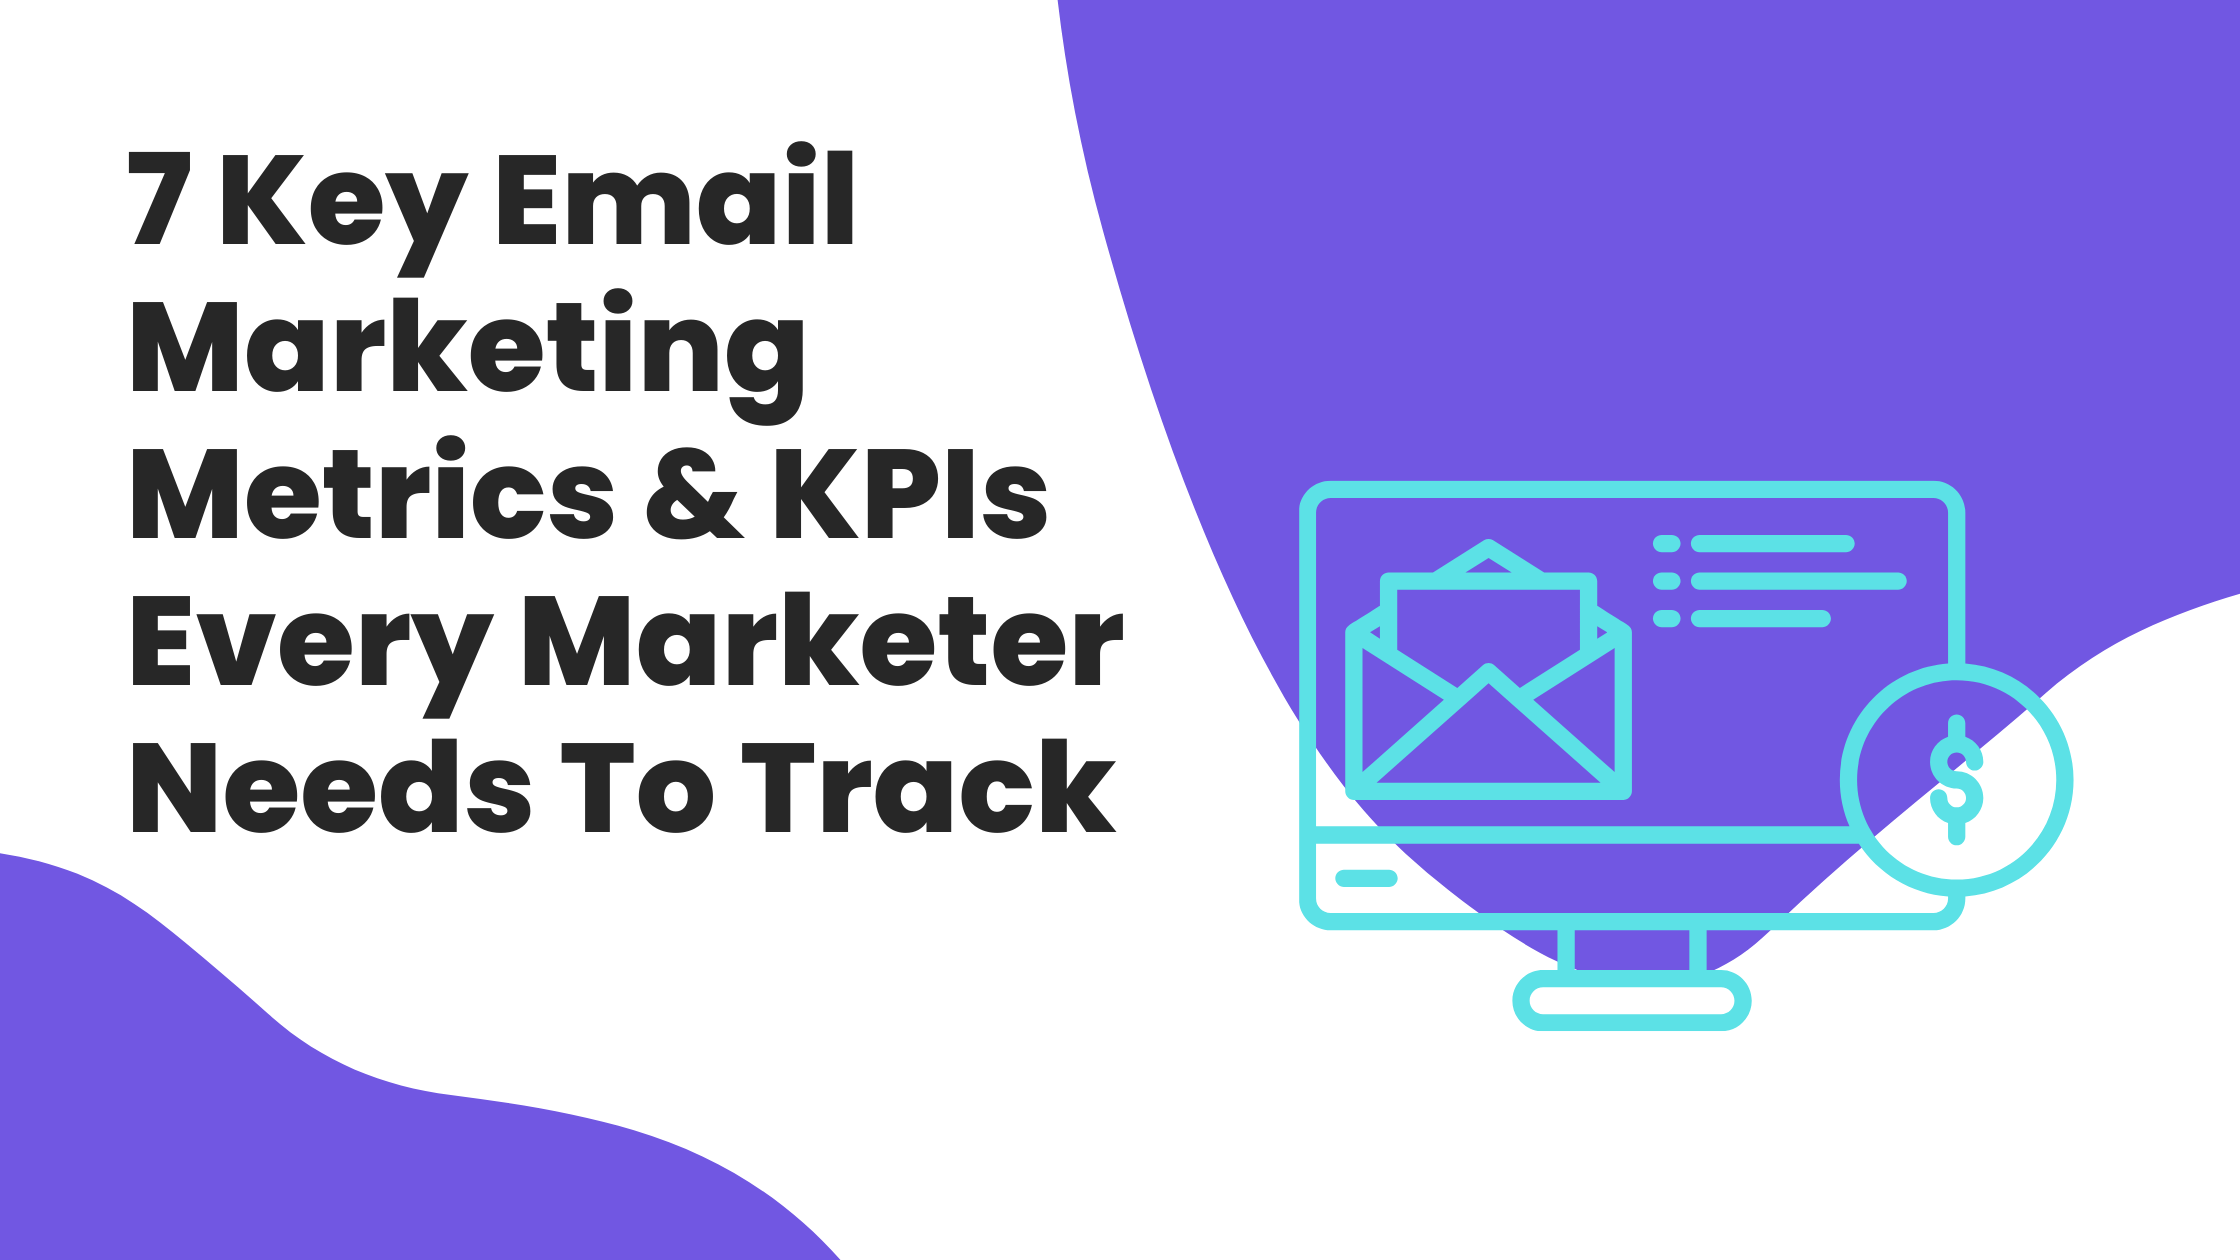 7 Key Email Marketing Metrics & KPIs Every Marketer Needs To Track